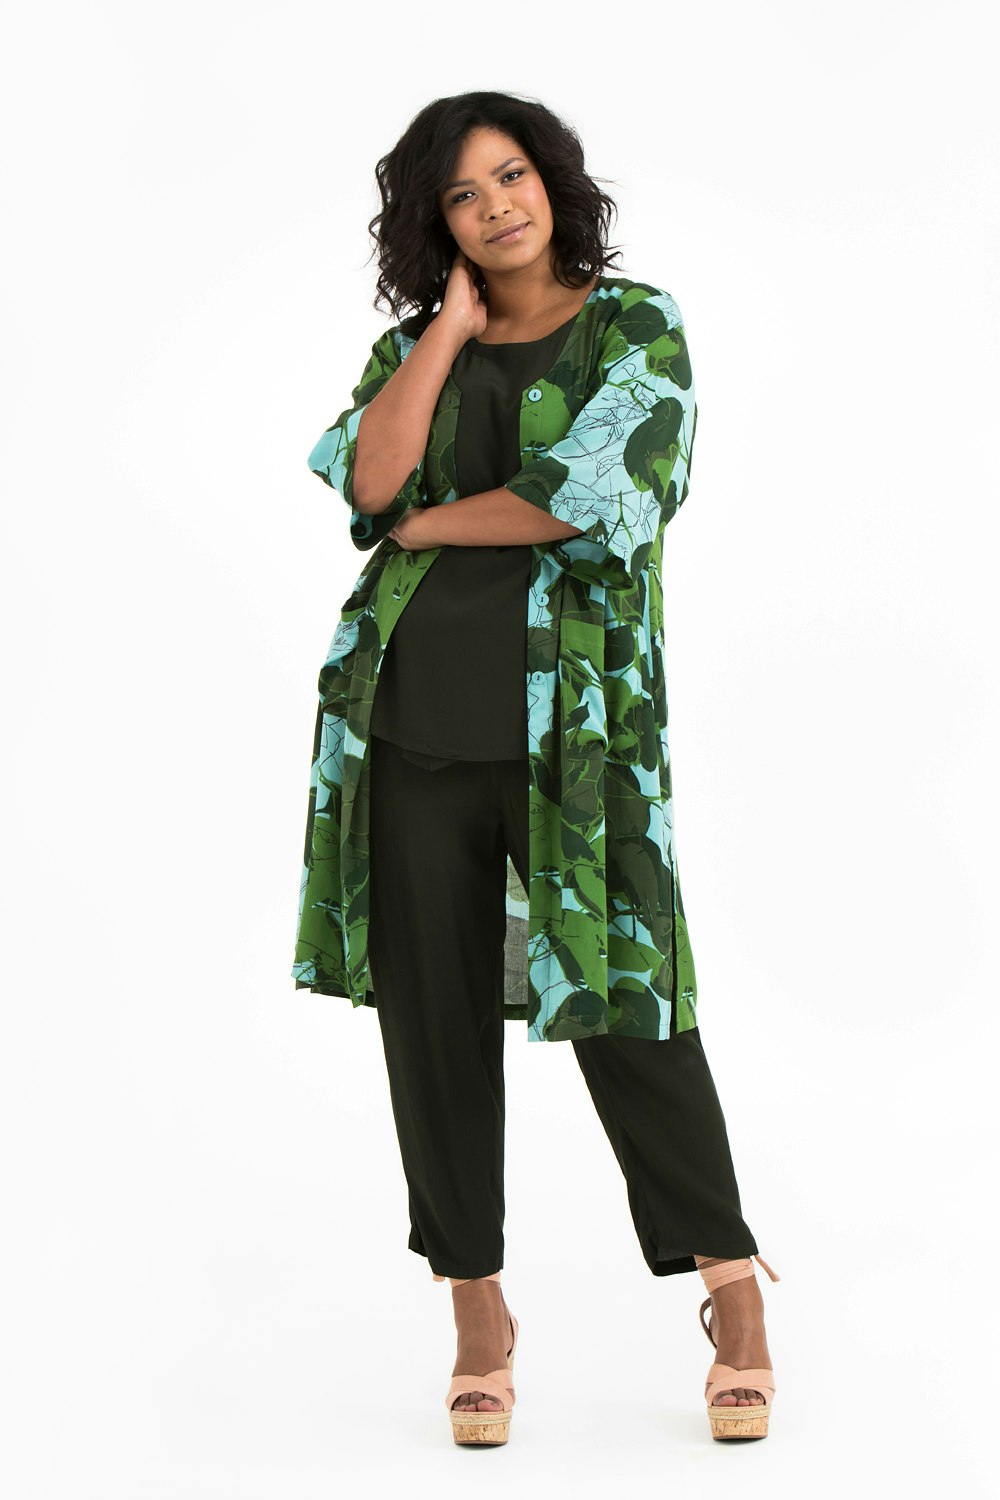 Knäppt blå/grön kimono | Stora storlekar | AliceDot.com - Damkläder stora  storlekar. - AliceDot